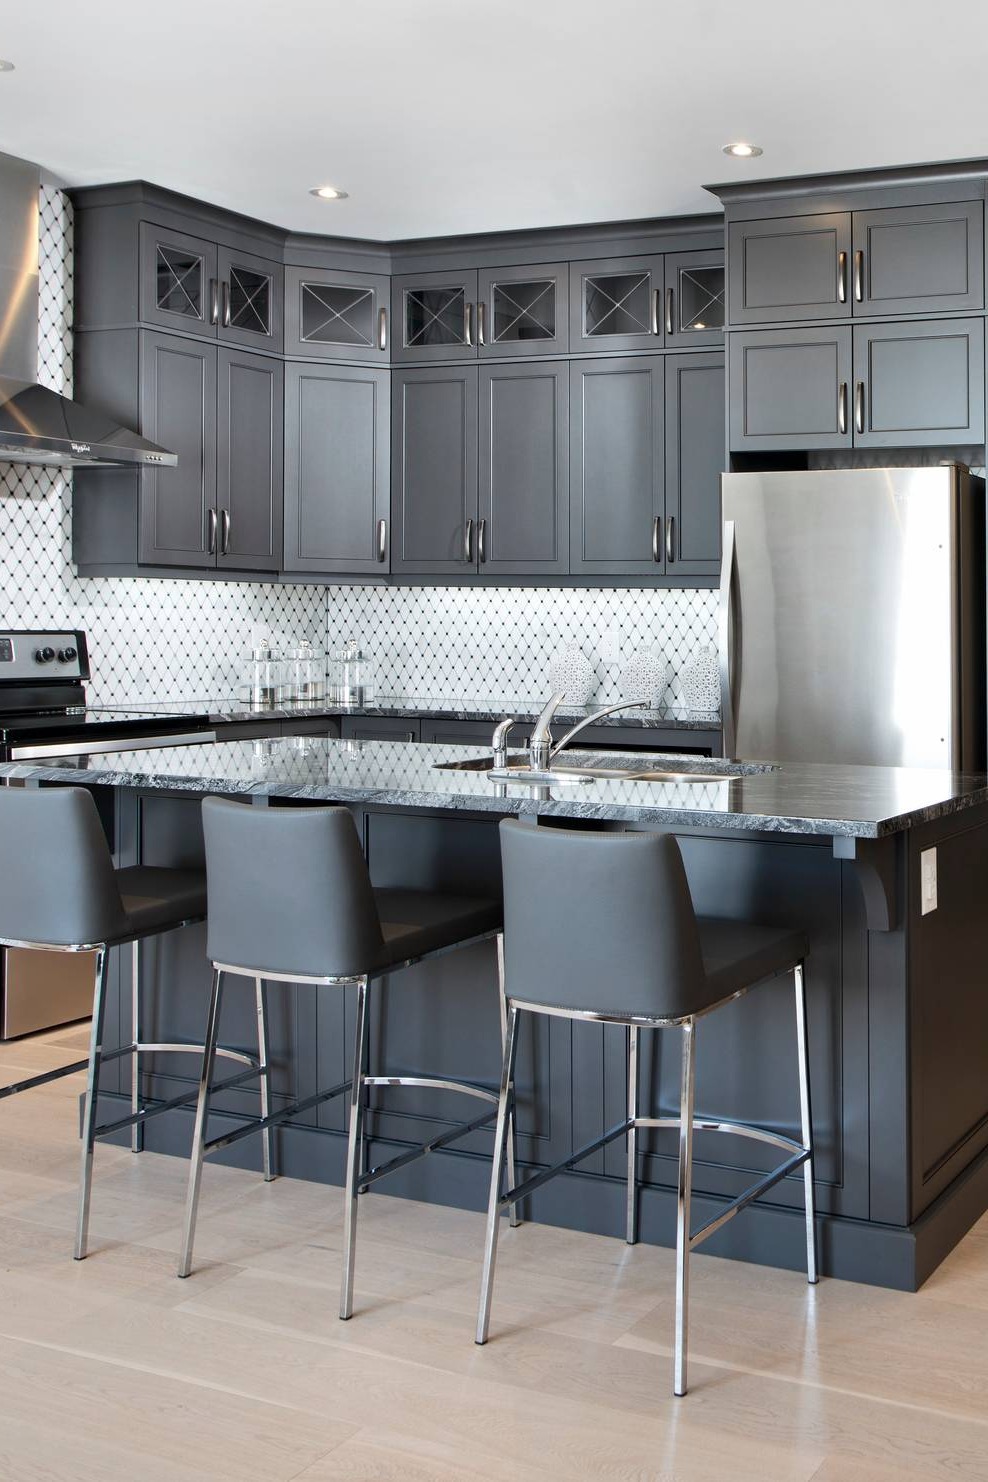 Charcoal gray Shaker Cabinets Granite Countertops Mosaic Tile Backsplash Light Wood Floor